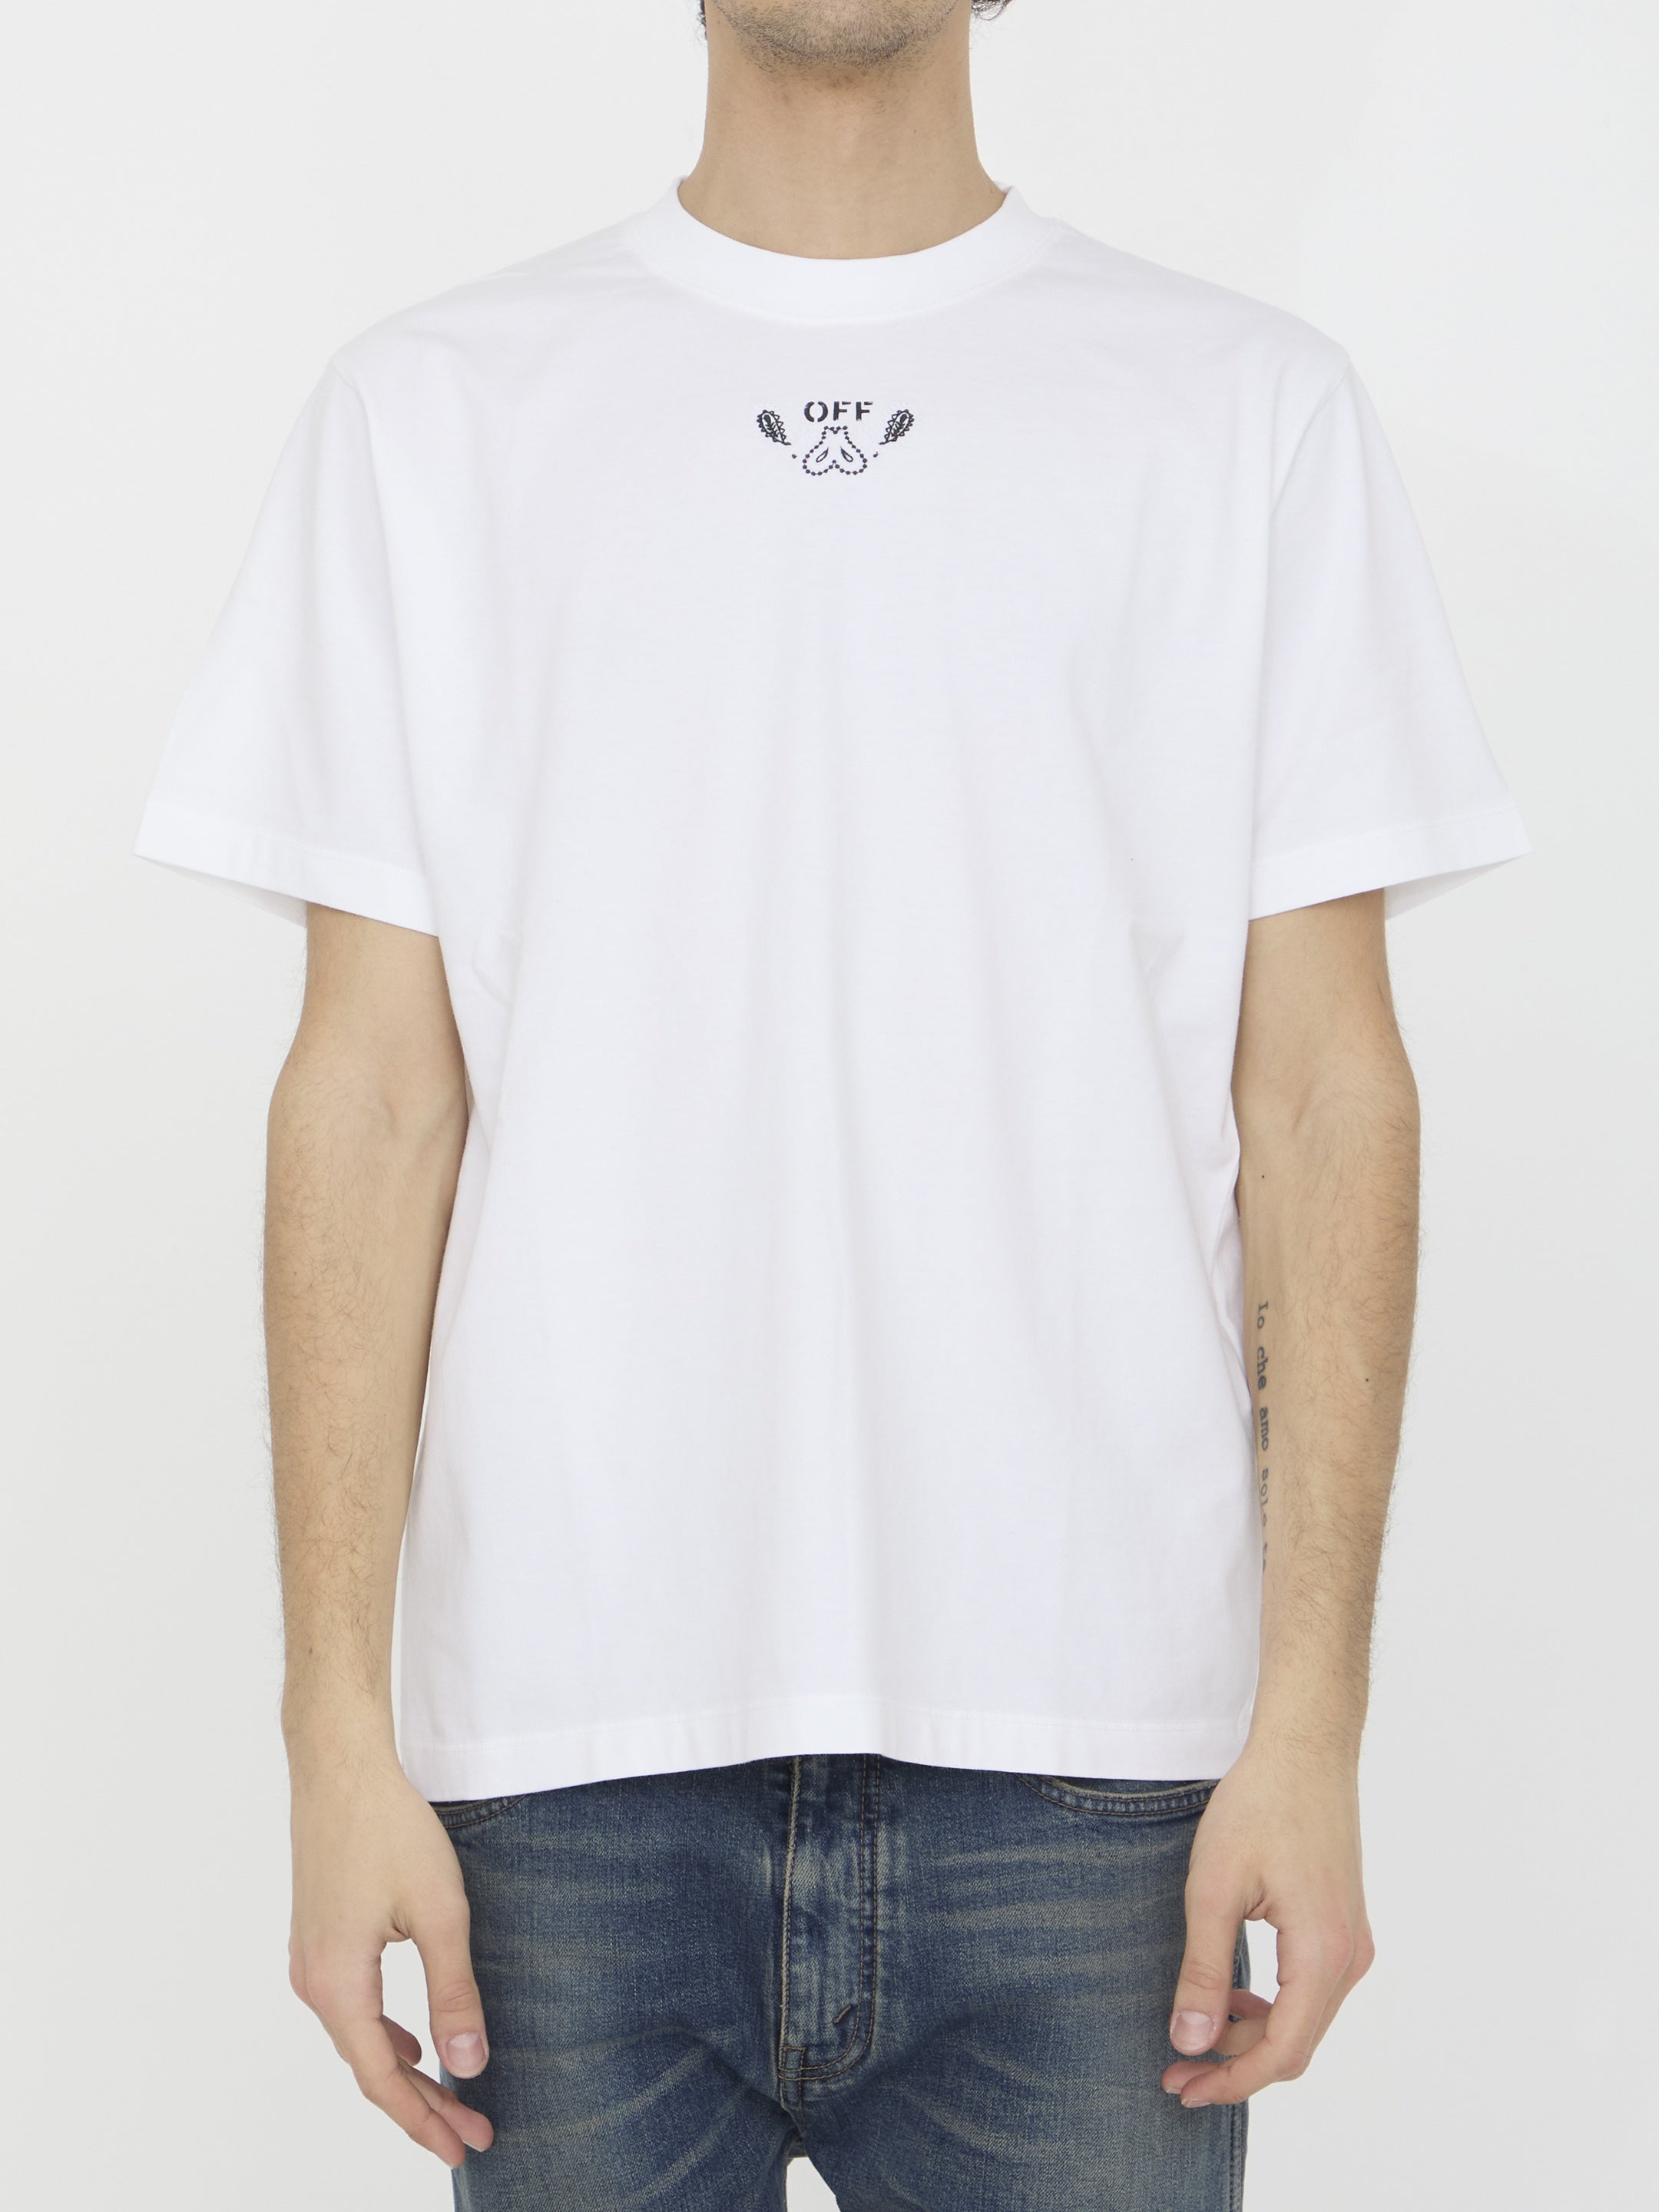 Bandana Arrow t-shirt